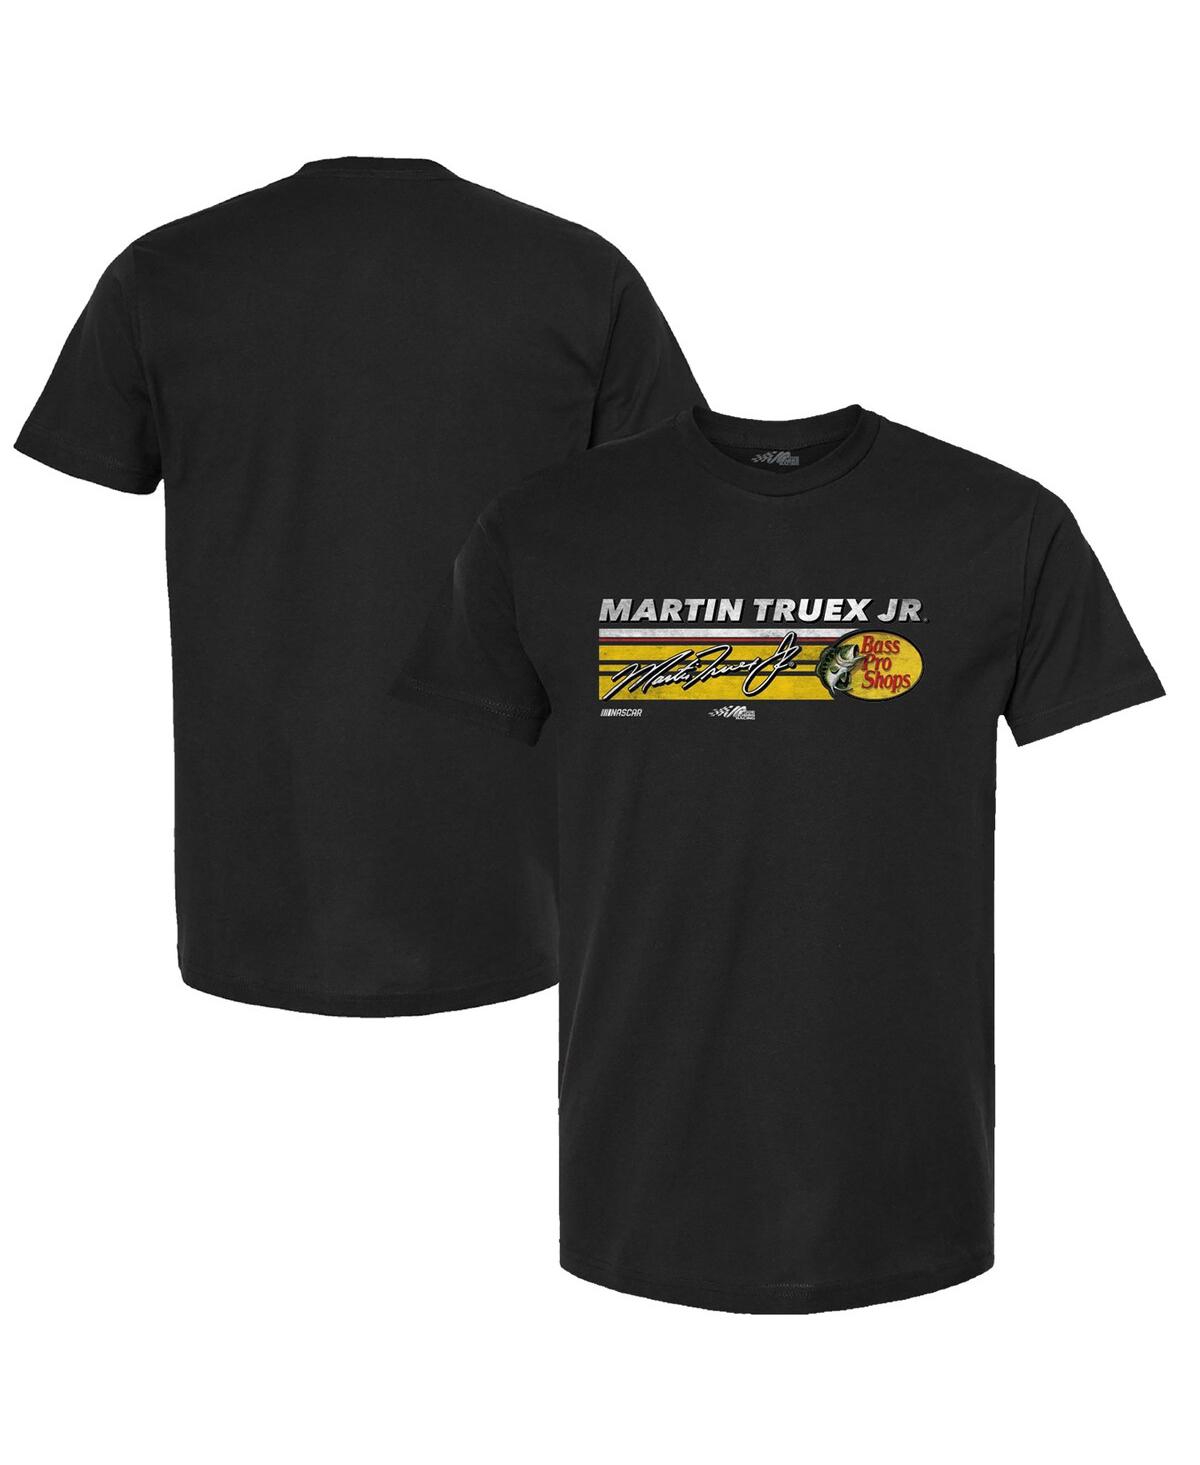 Richard Childress Racing Team Collection Men's  Black Martin Truex Jr Hot Lap T-shirt